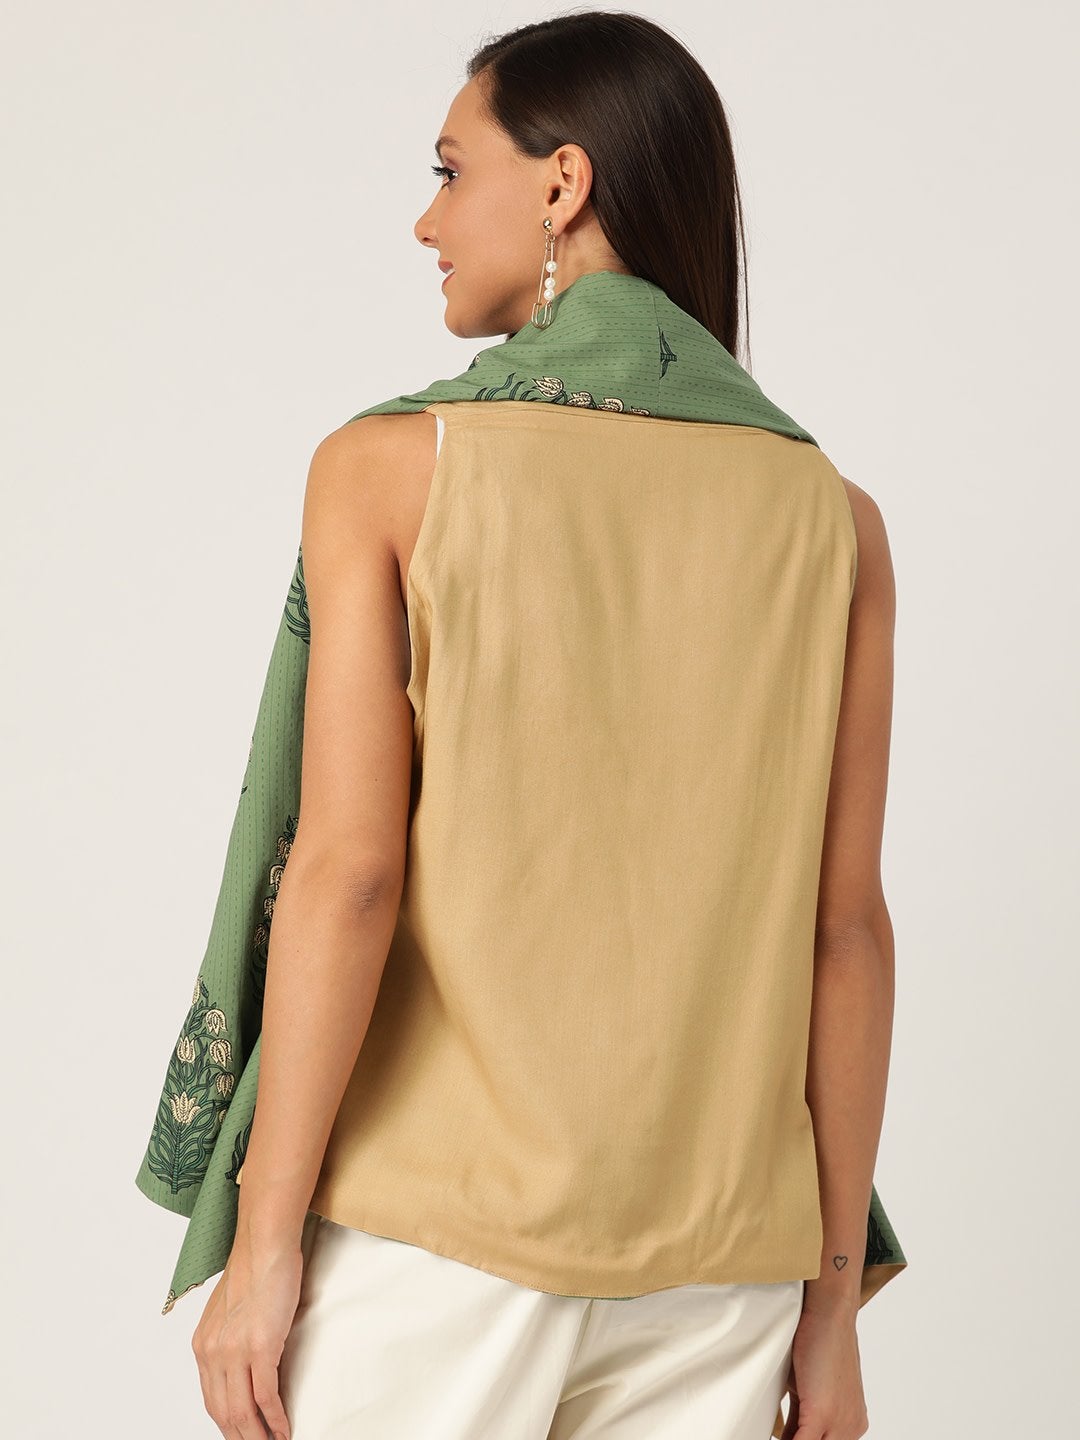 Women's Reversible Shrug In Green & Beige Floral Print - InWeave